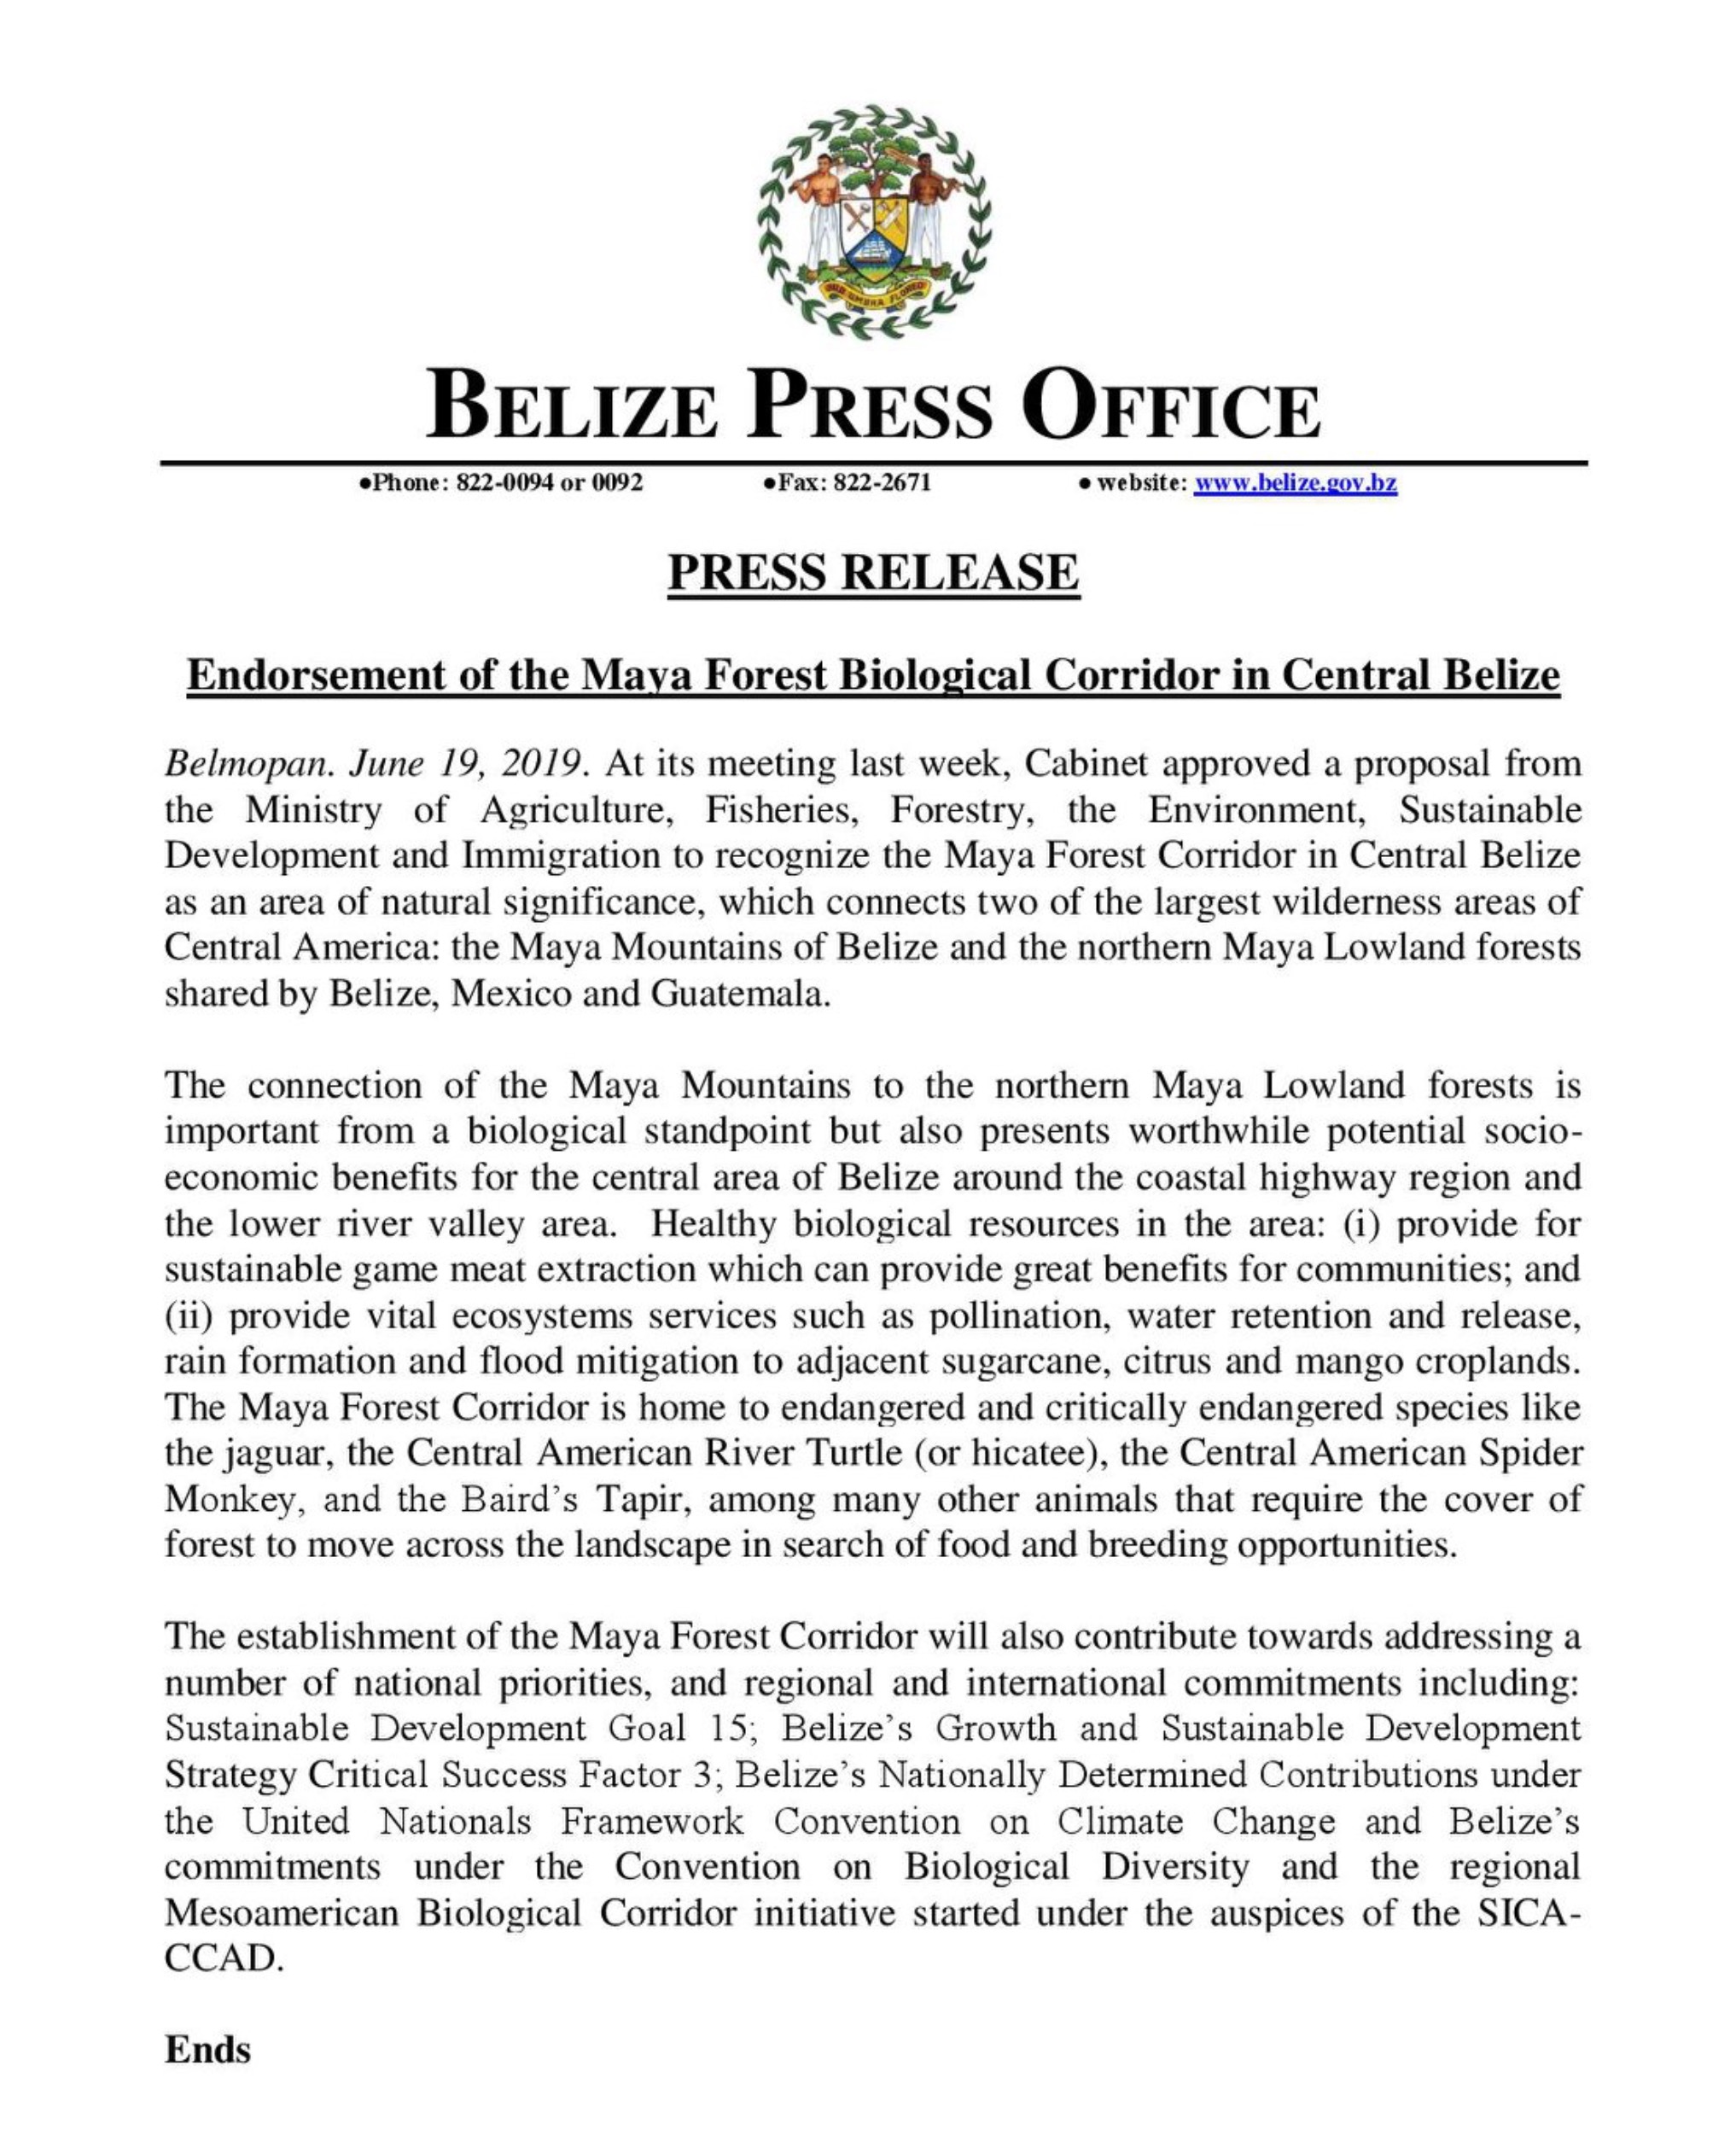 Endorsement of the Maya Forest Biological Corridor in Central Belize.